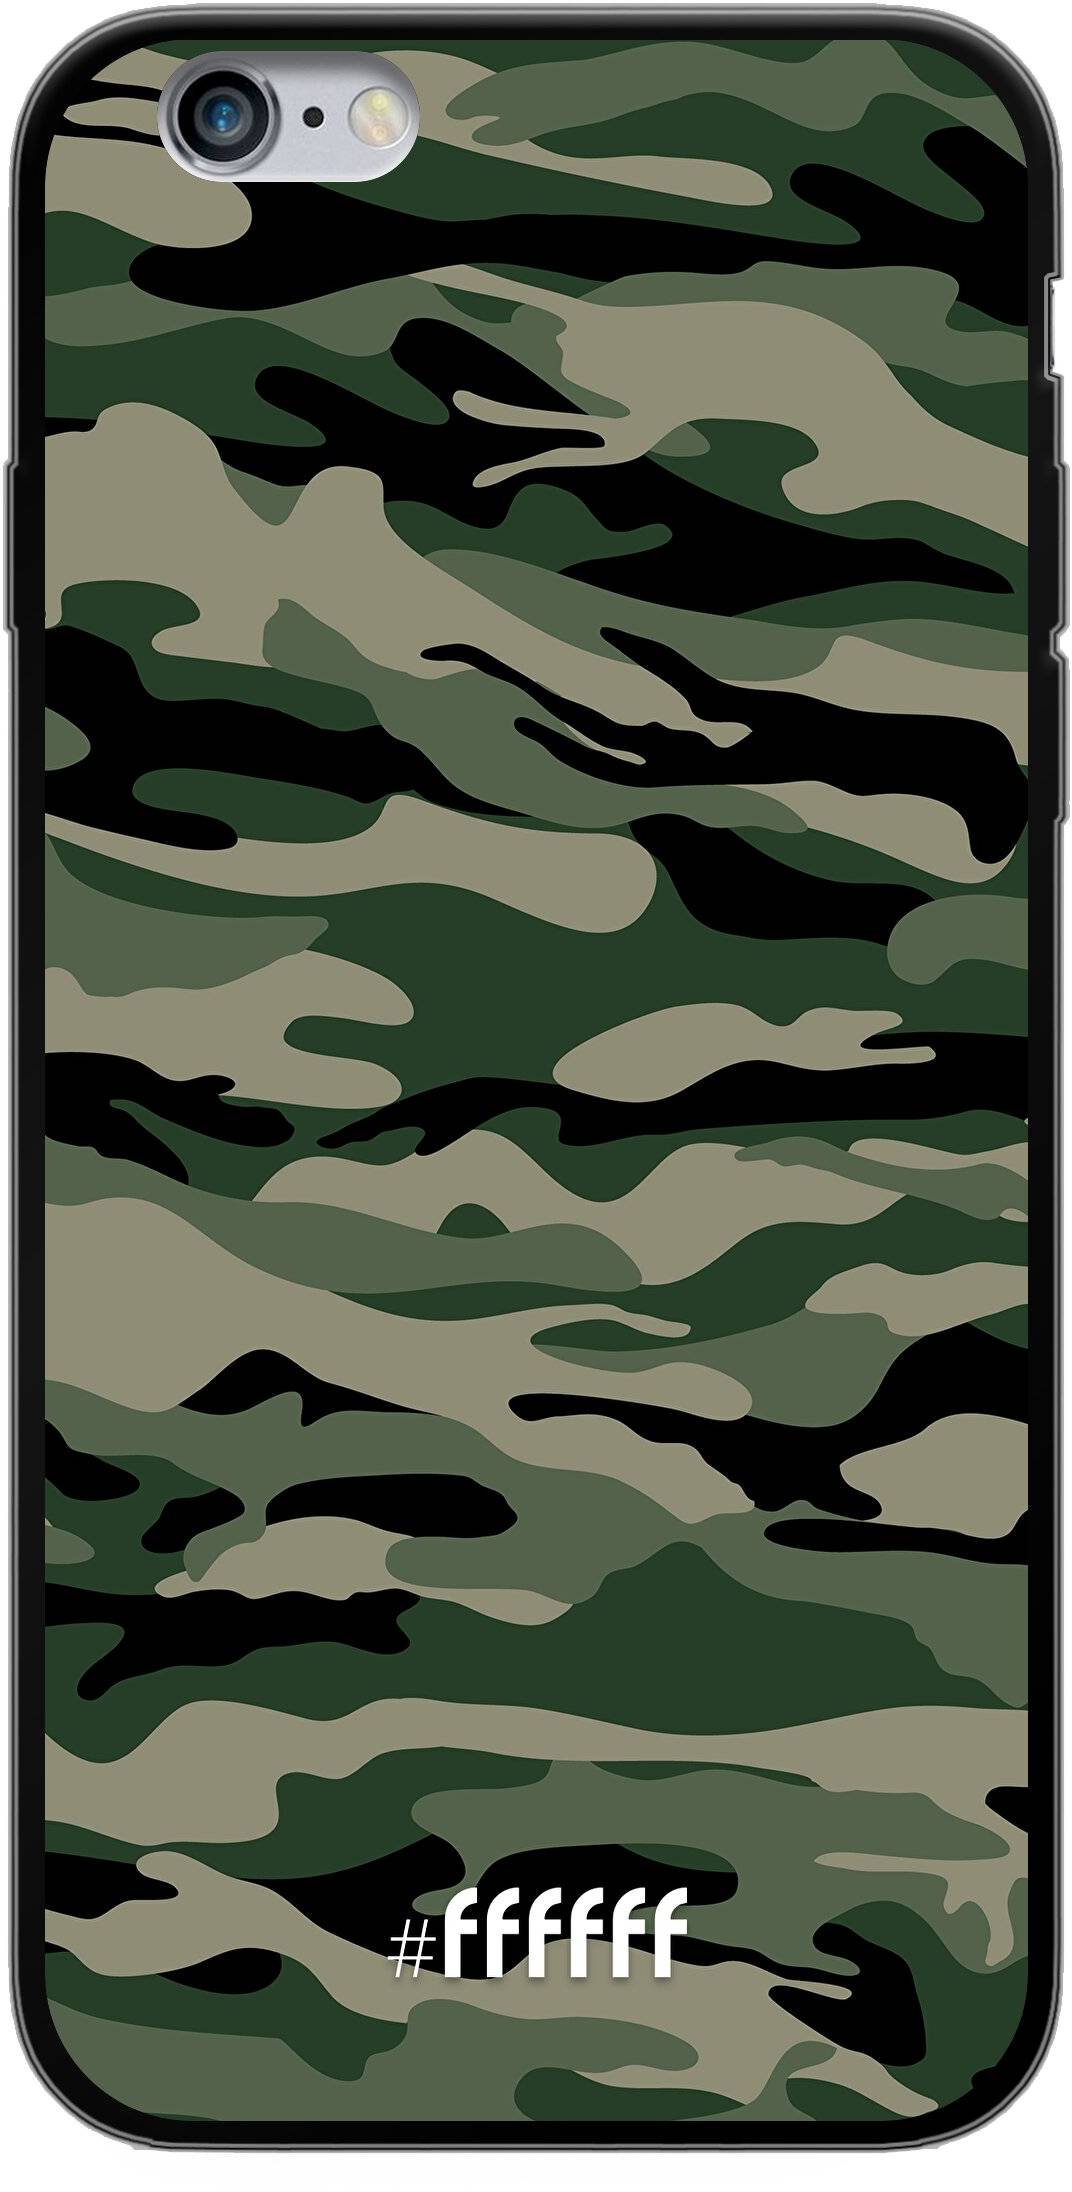 Woodland Camouflage iPhone 6s